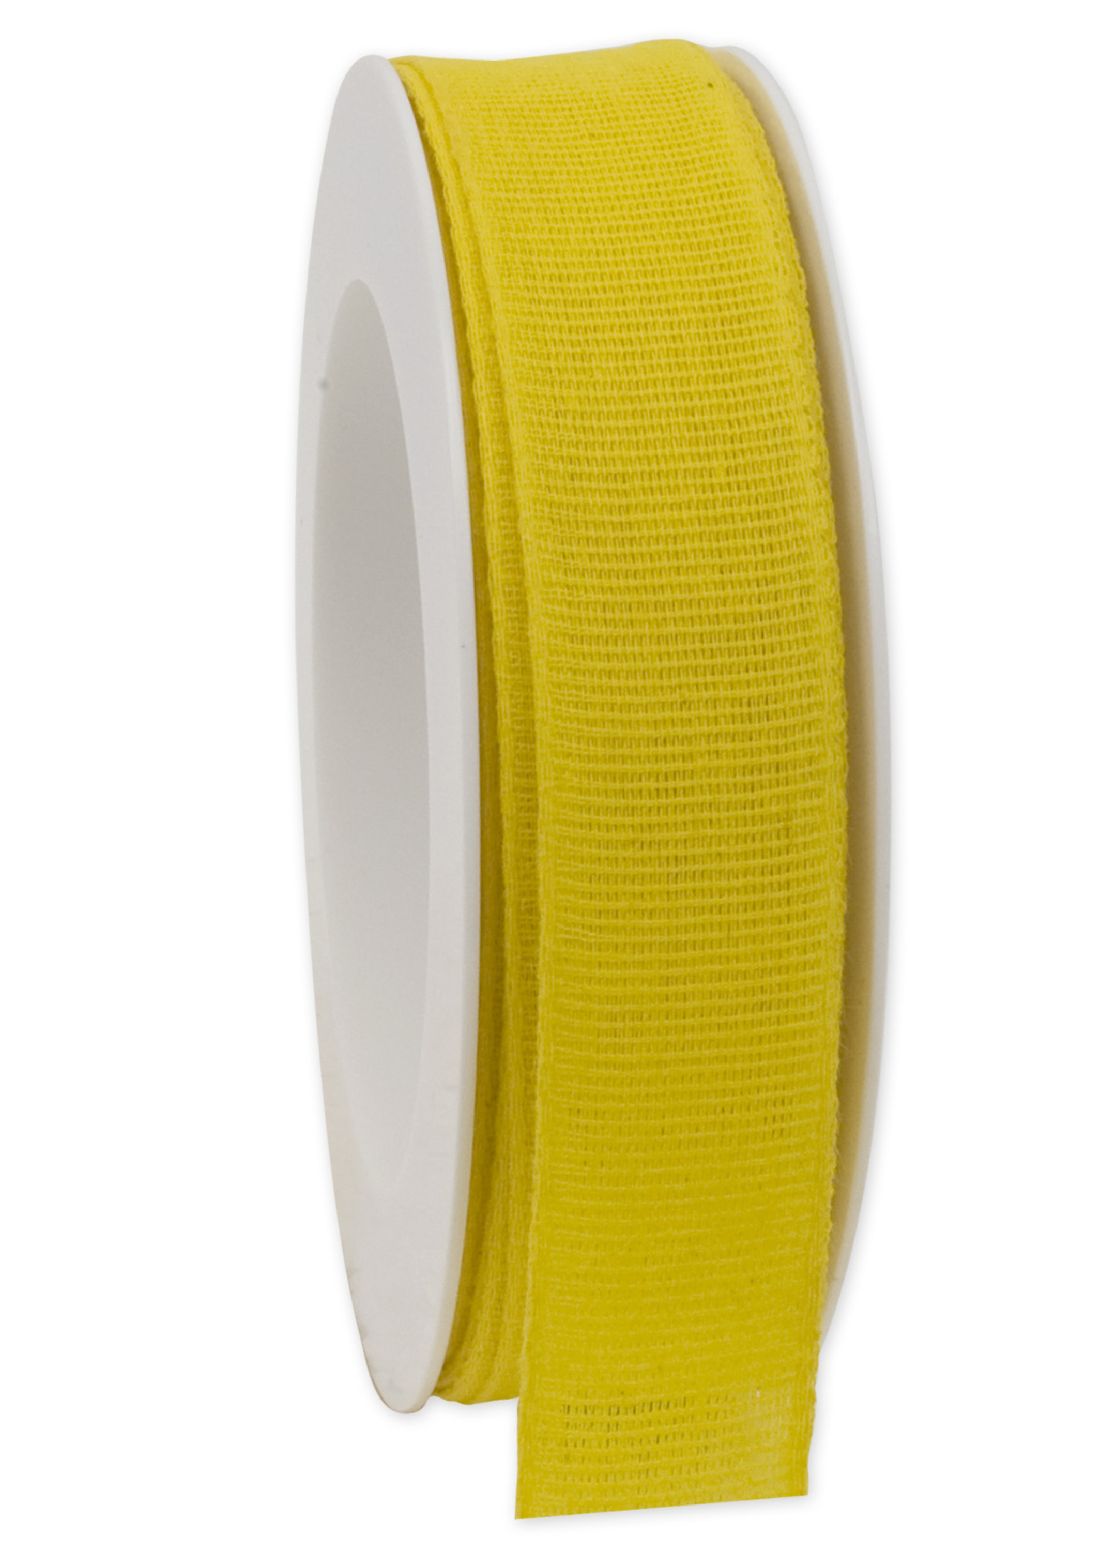 Basicband NATURE gelb 10 biologisch abbaubar B:25mm L:20m Baumwollband 267